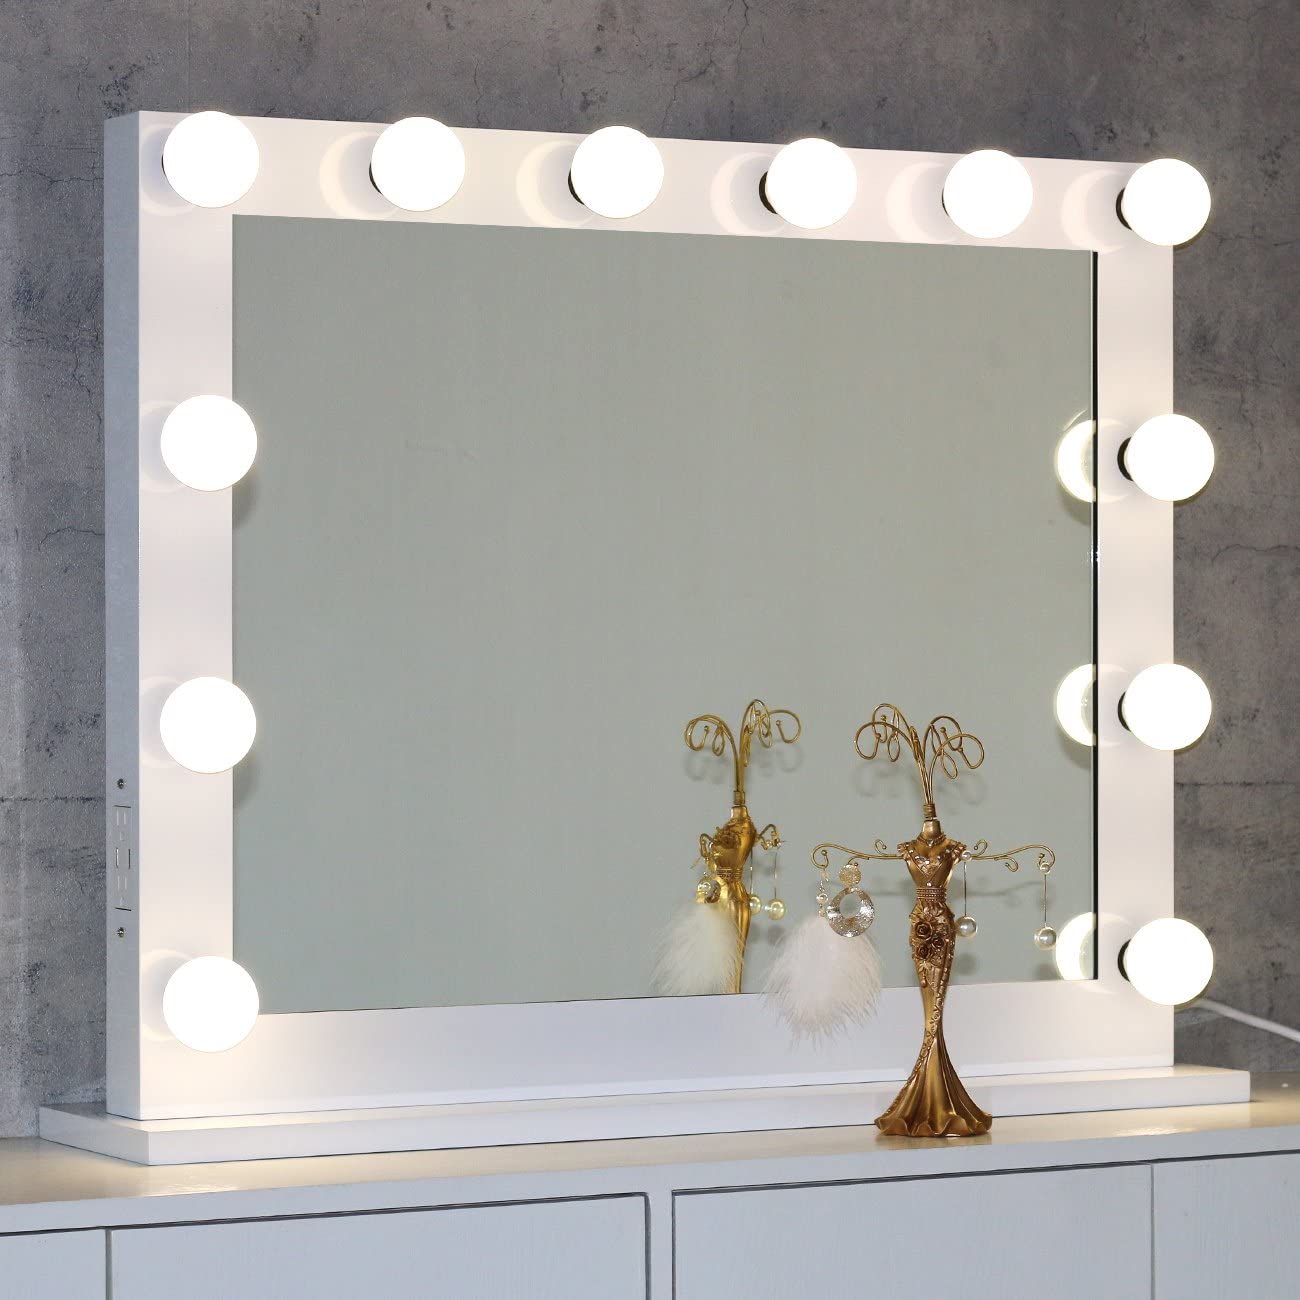 Top 7 Best Light Up Vanity Mirrors, Best Illuminated Vanity Mirrors